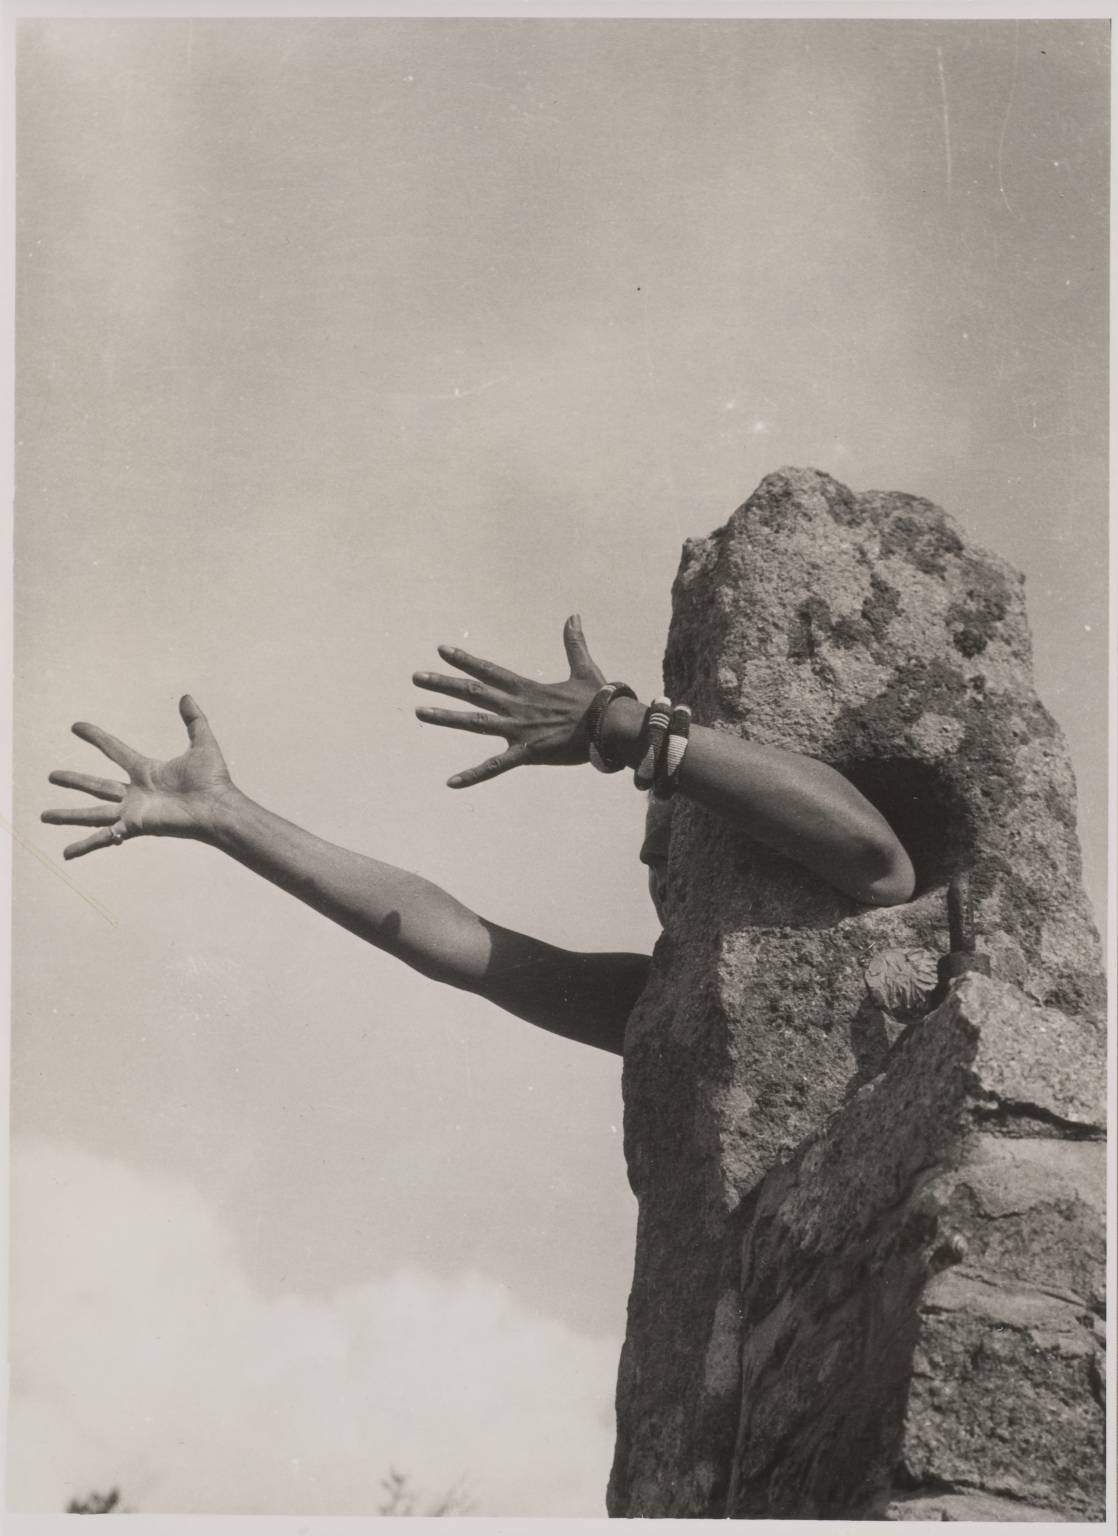 Claude Cahun, Je tends les bras, 1931-1932